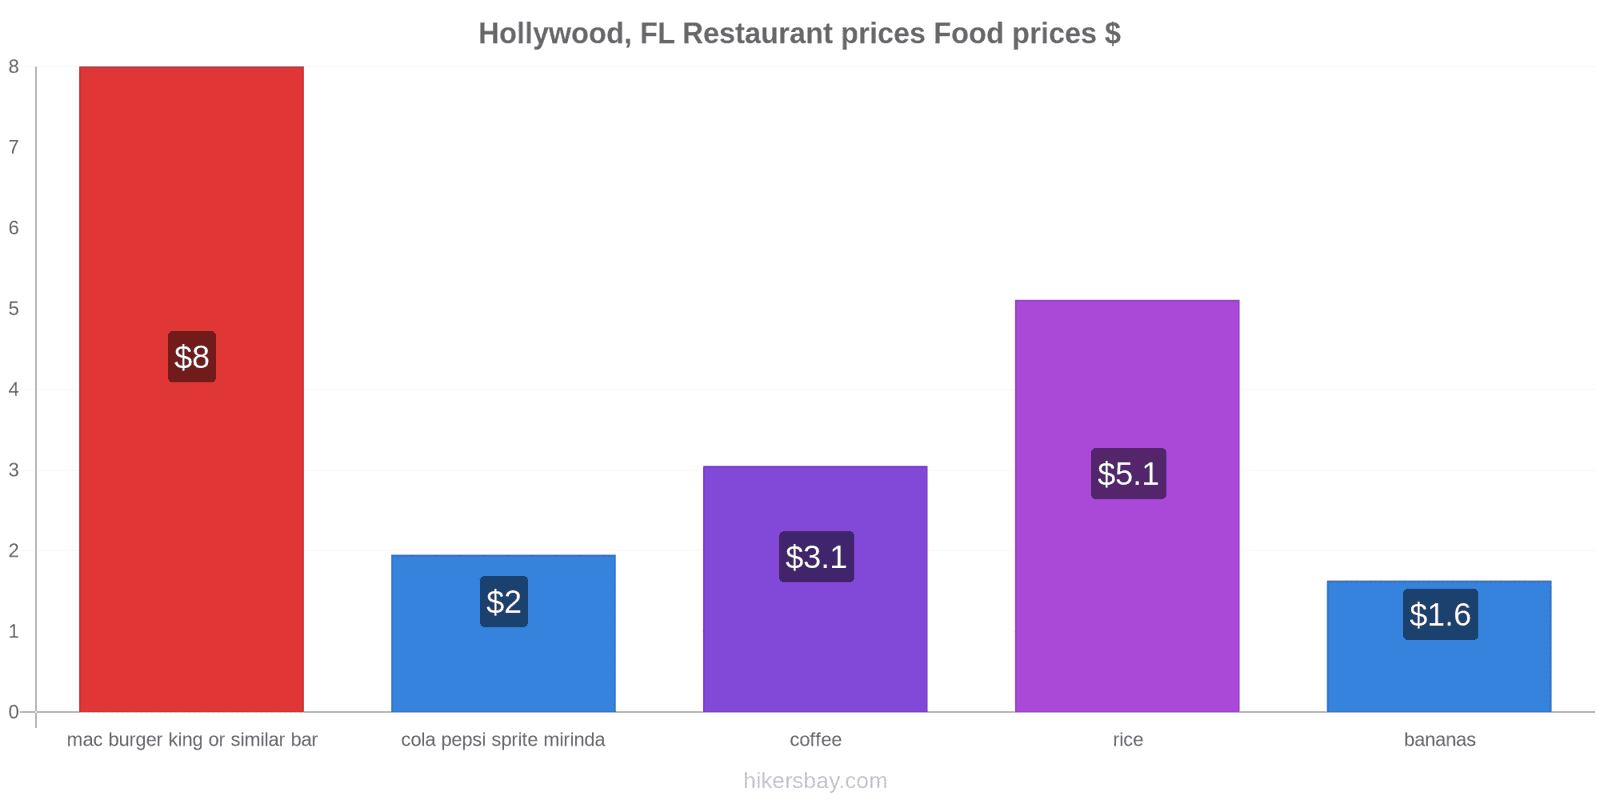 Hollywood, FL price changes hikersbay.com